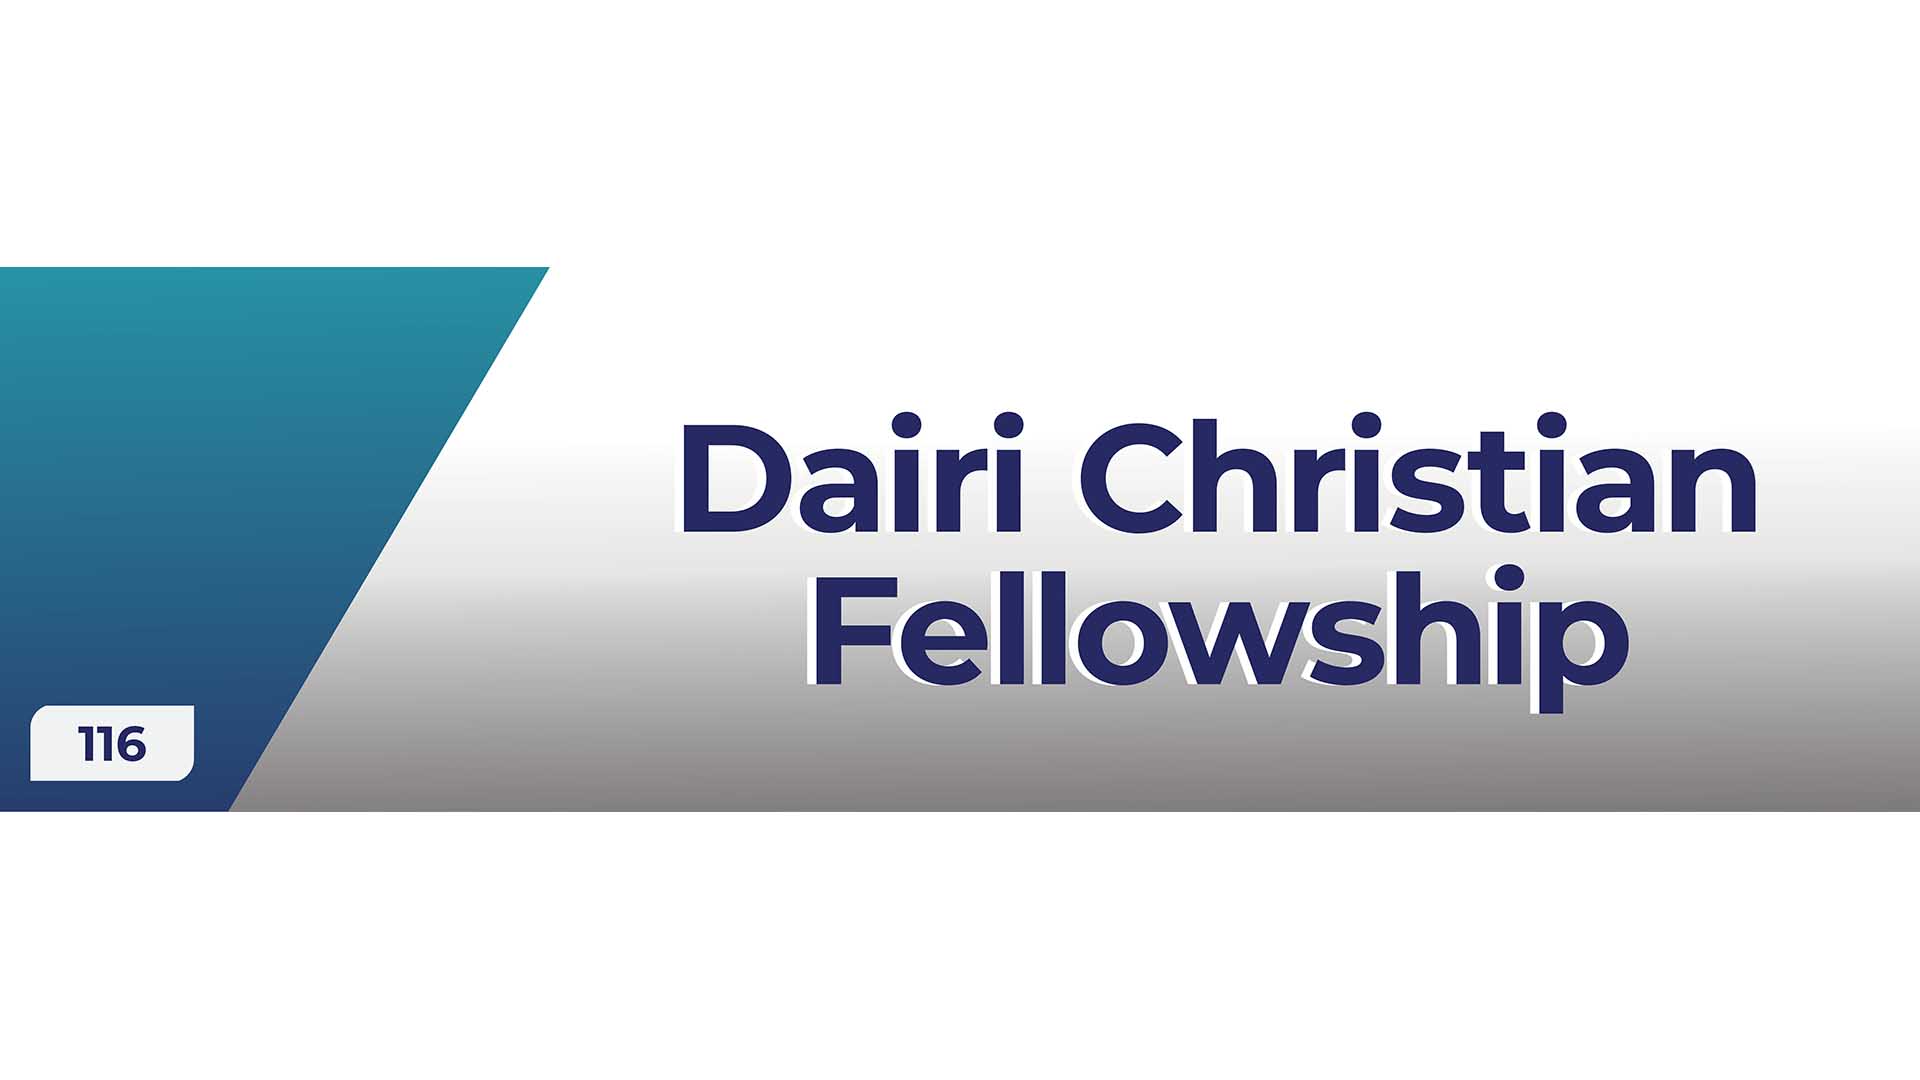 Dairi Christian Fellowship logo